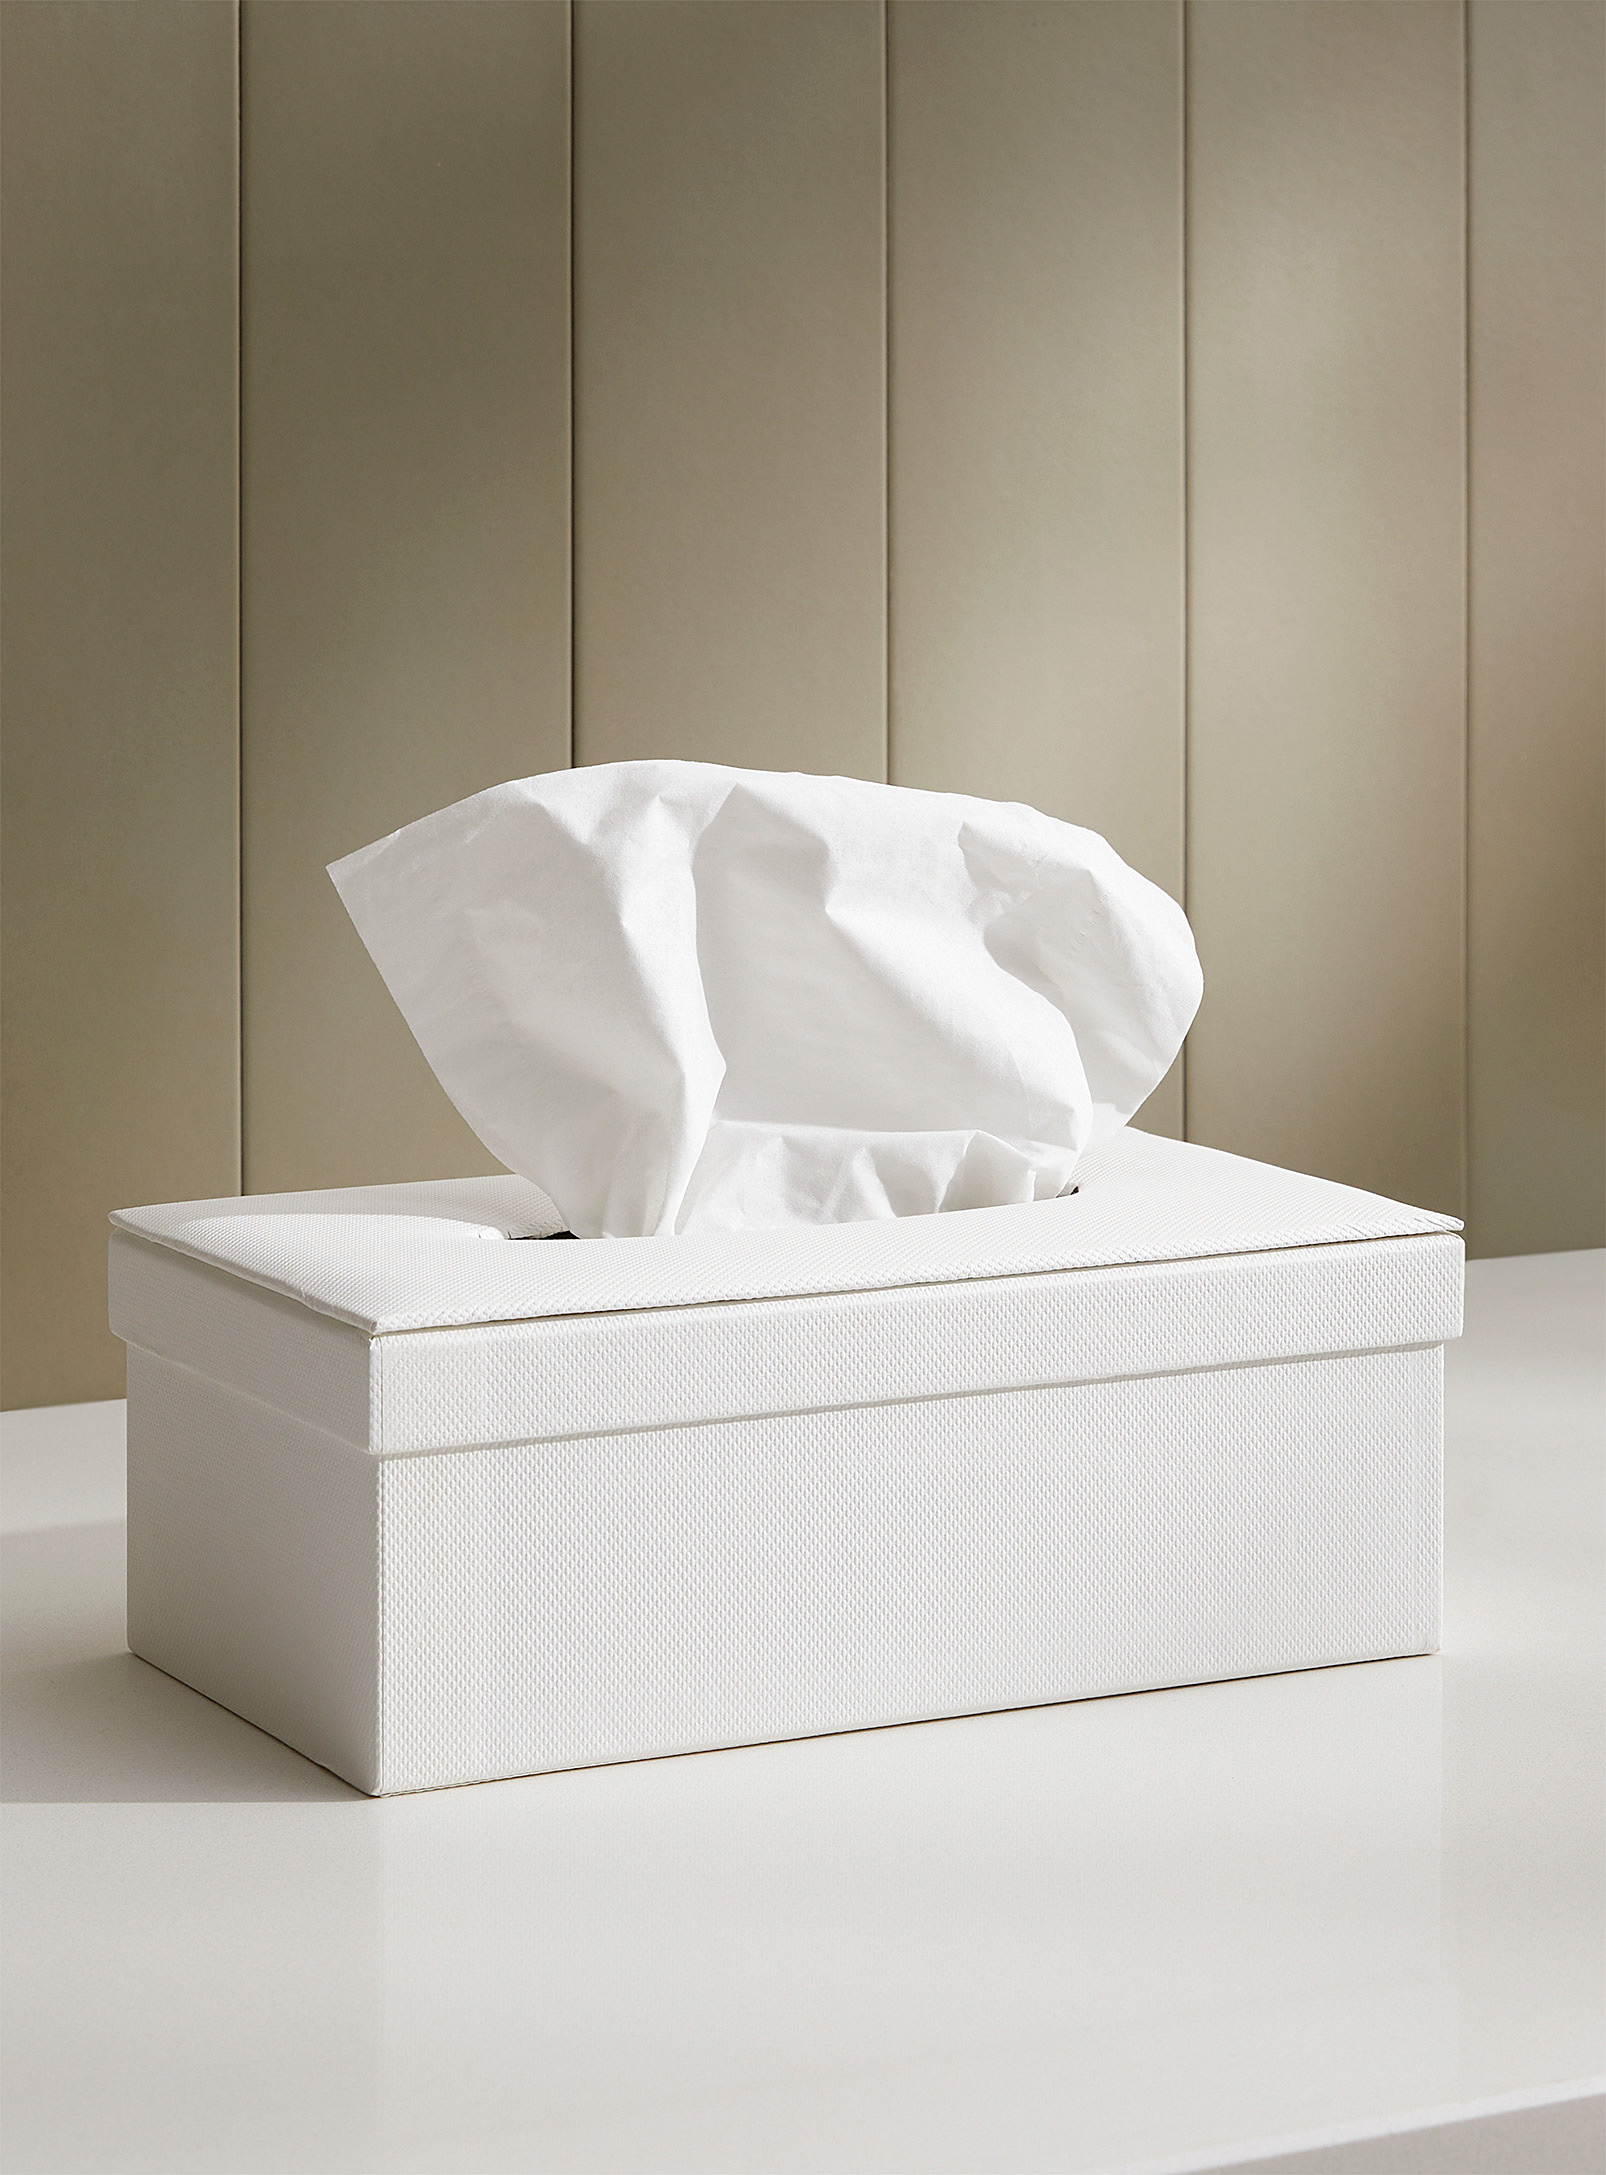 Simons Maison Textured White Tissue Box